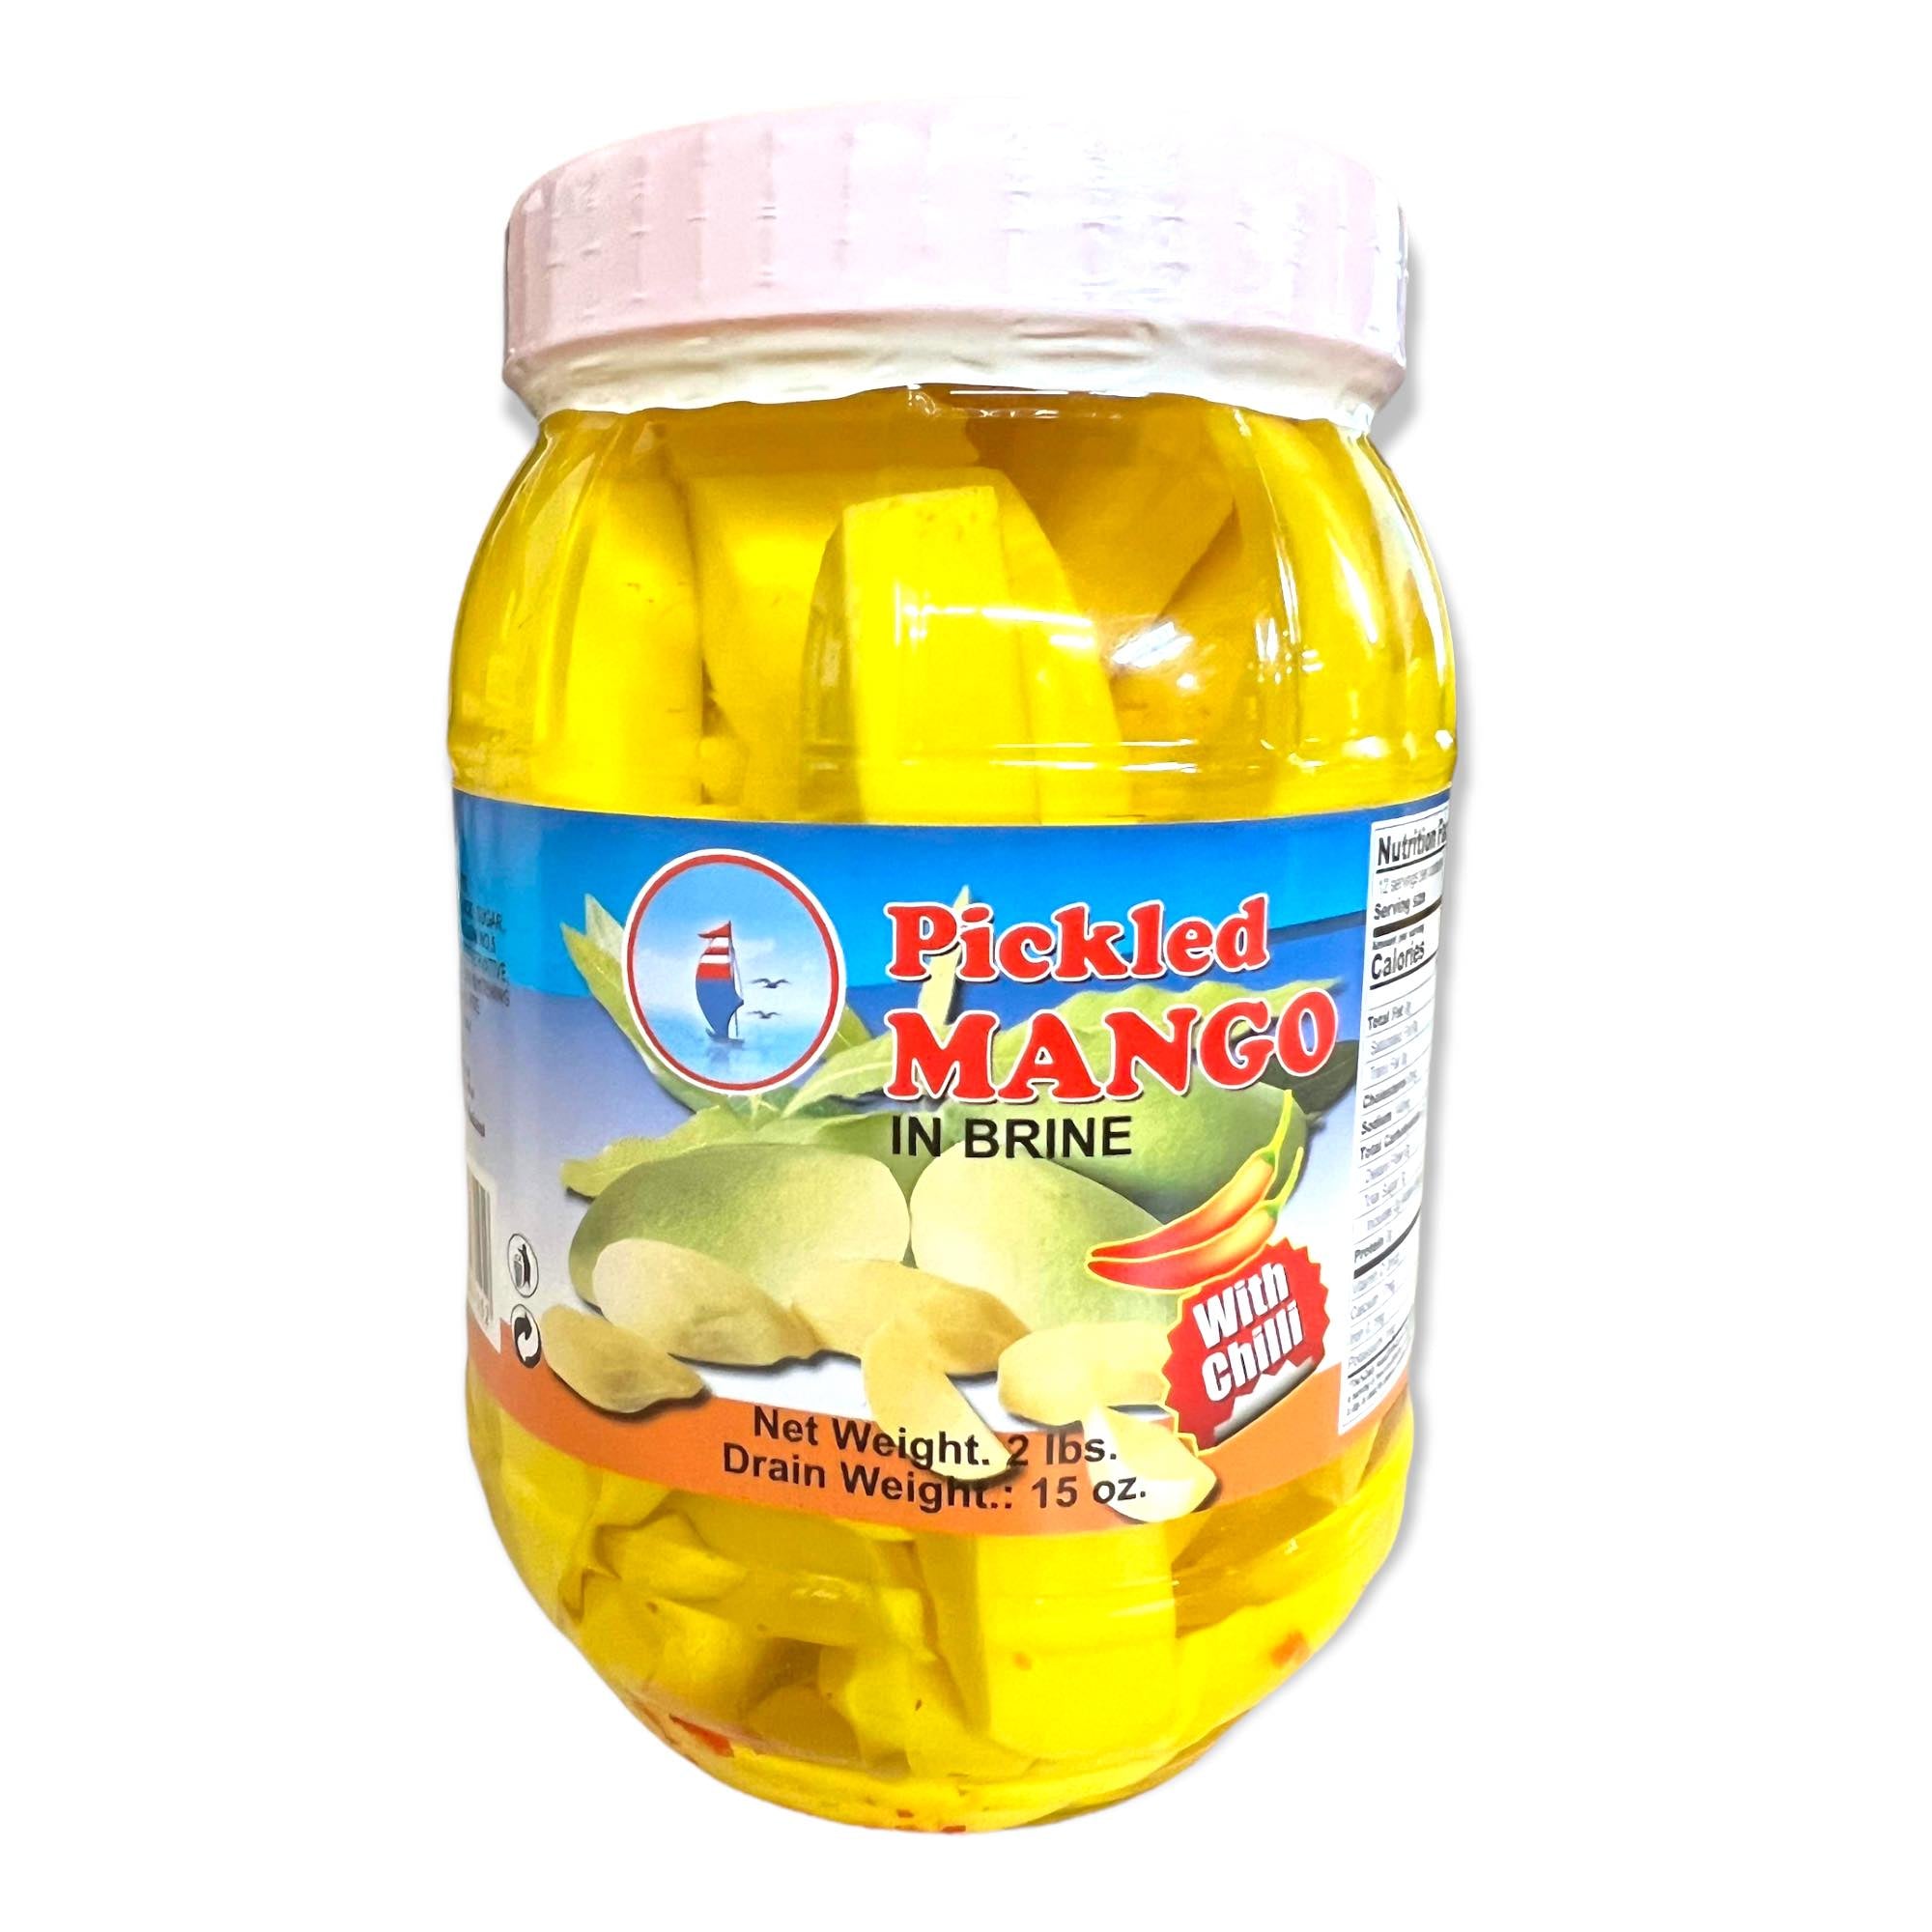 TL Pickled Mango with Chili in Brine - 15 OZ